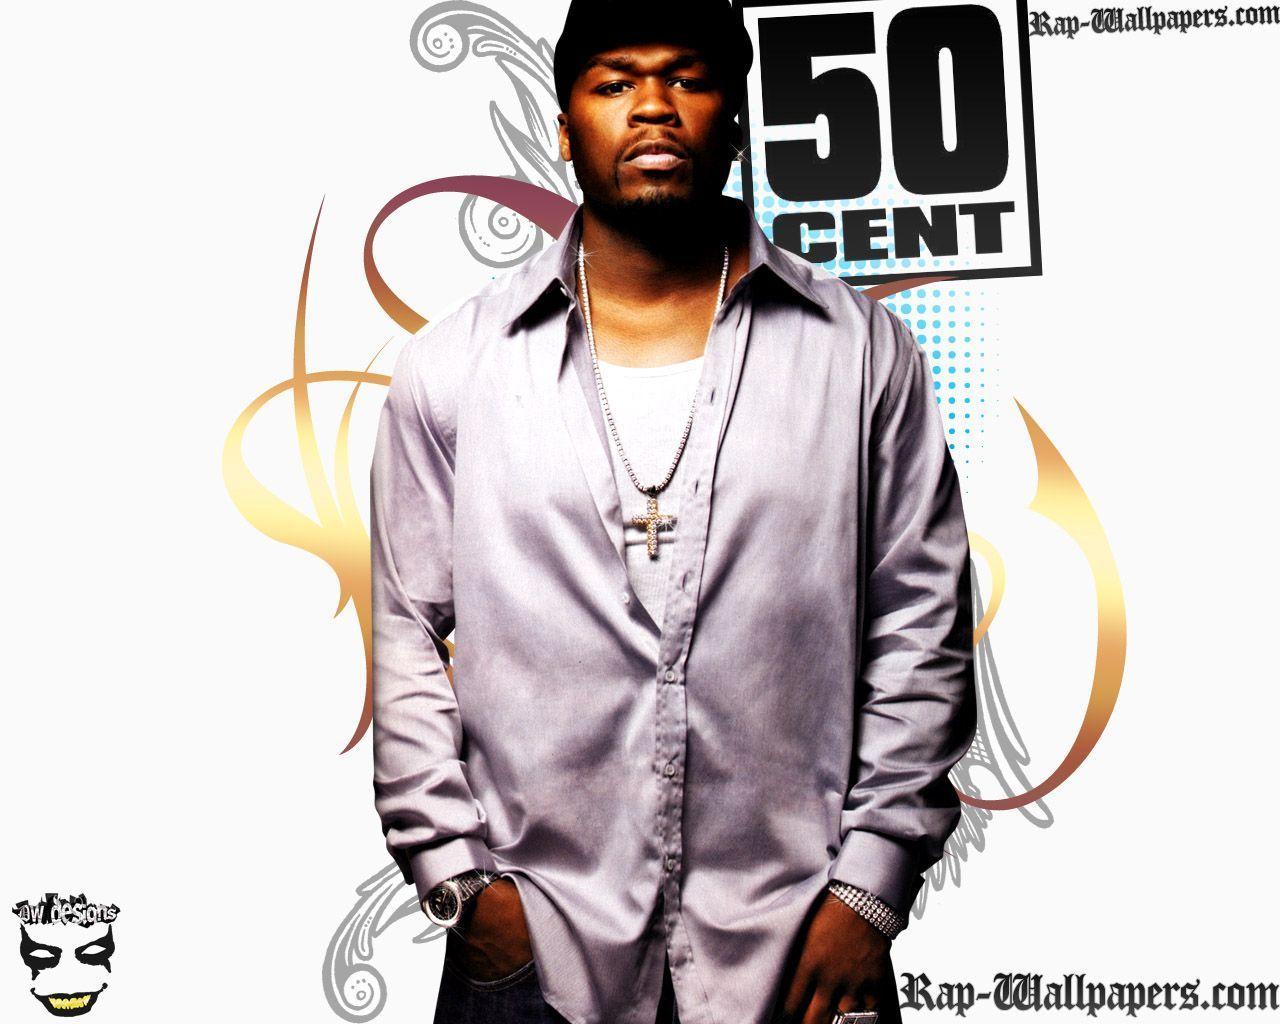 image For > Eminem And 50 Cent Wallpaper